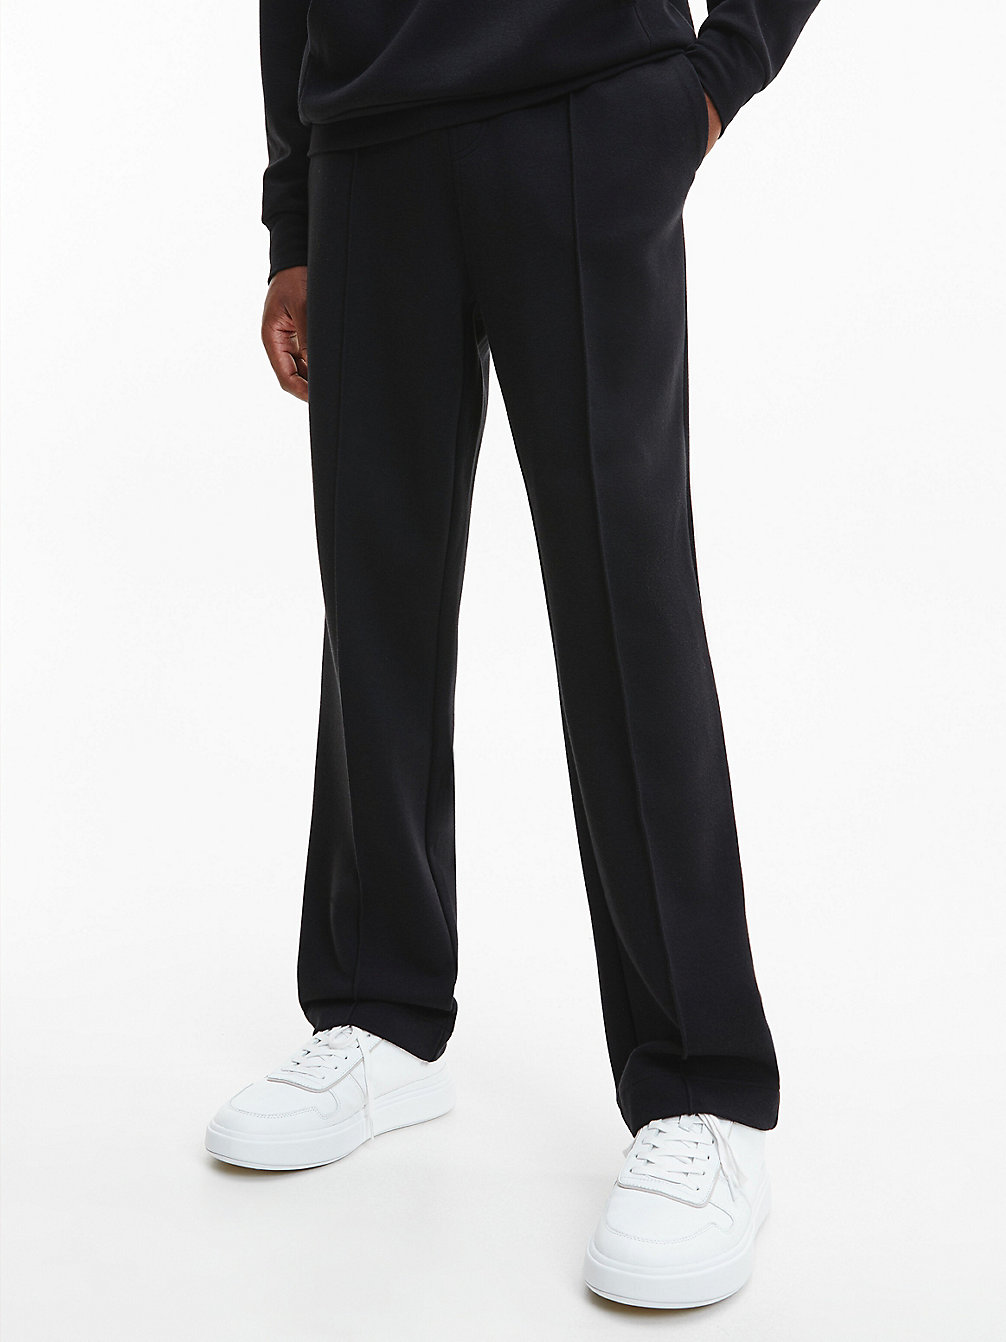 CK BLACK > Свободные джоггеры с широкими штанинами > undefined женщины - Calvin Klein